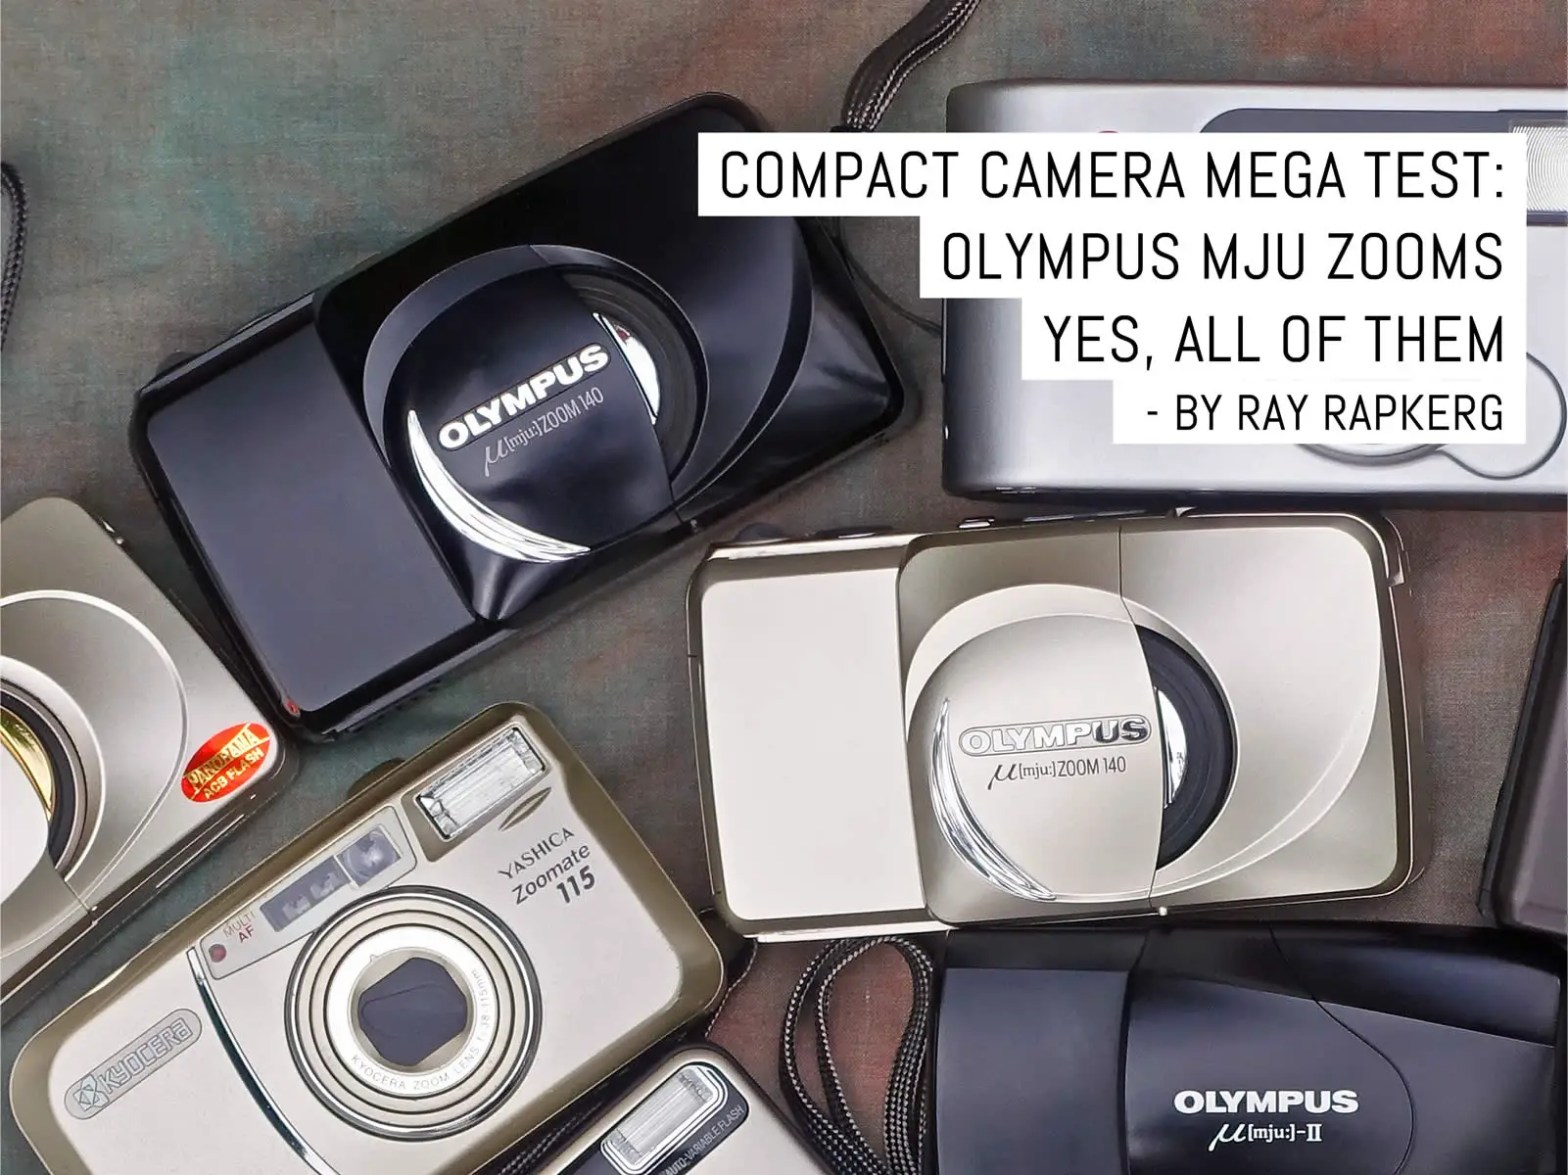 Compact camera mega test: Olympus MJU Zooms, all of them